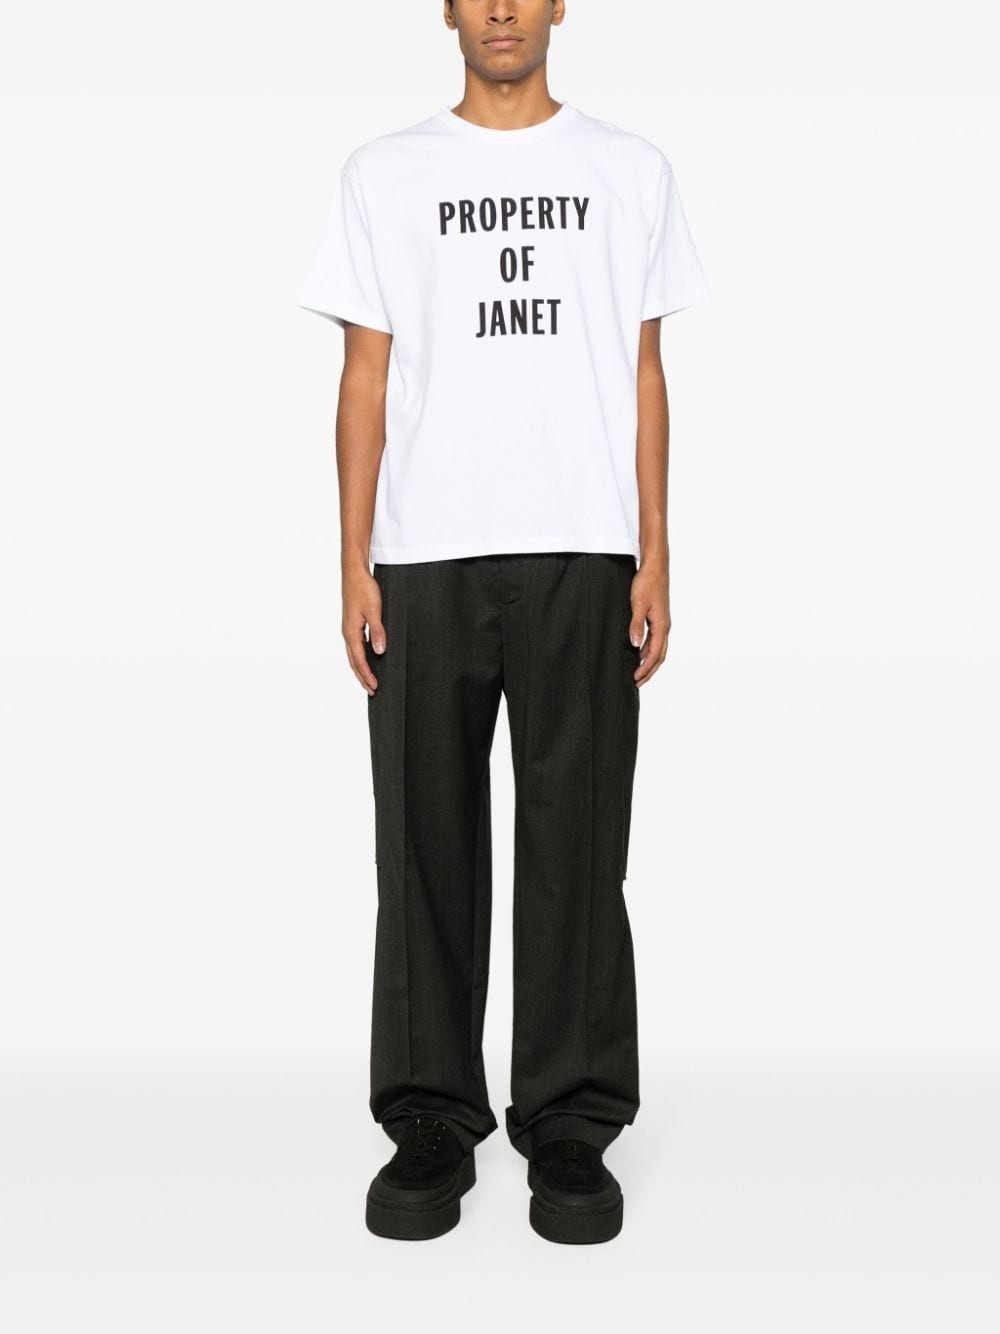 Janet cotton T-shirt - 2